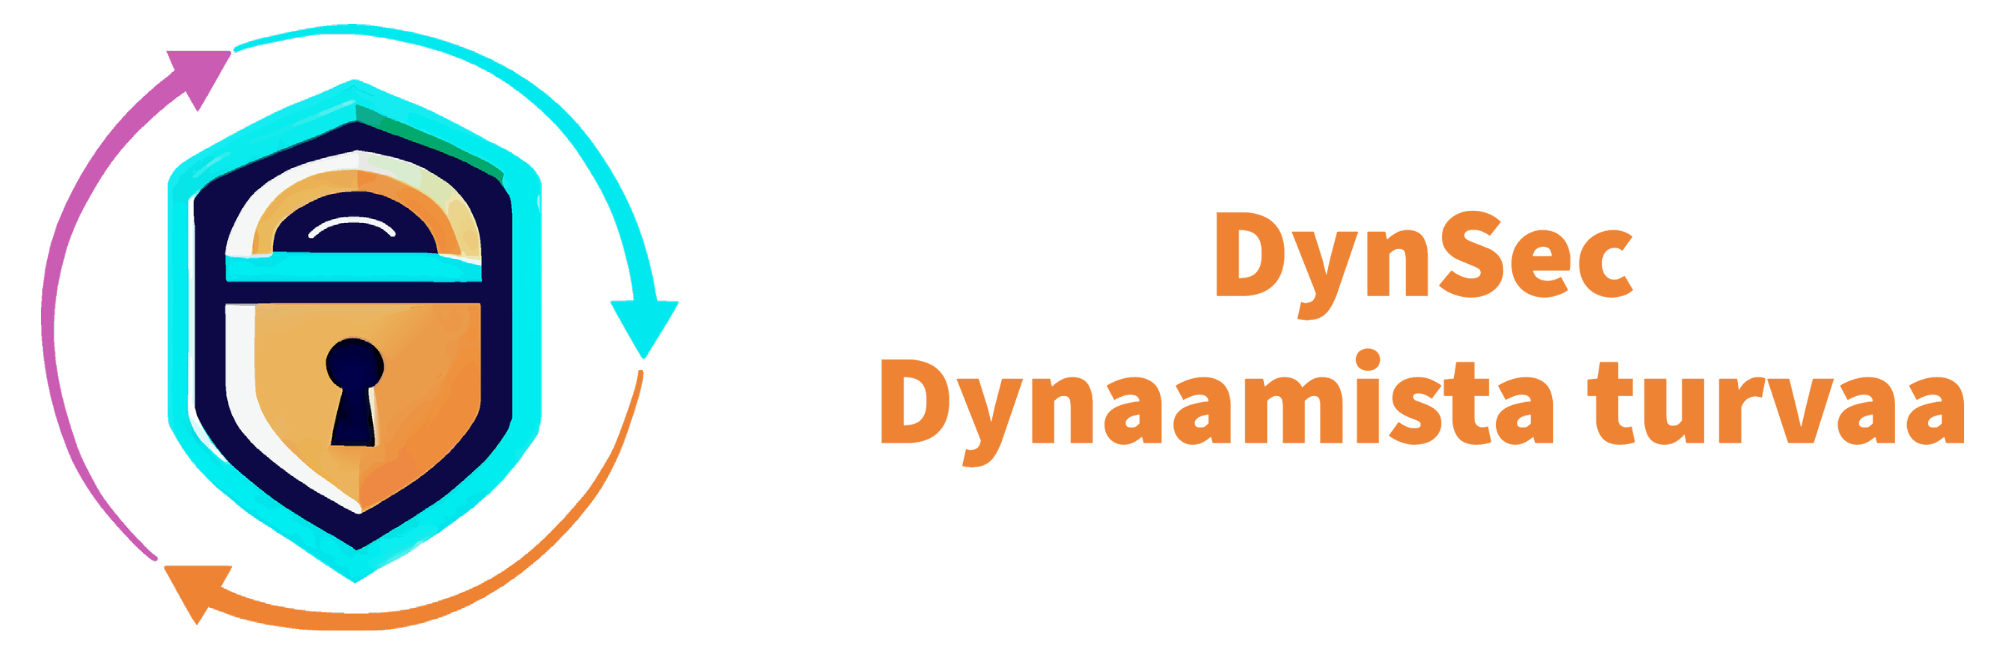 Dynsec Oy - Dynaamista turvaa